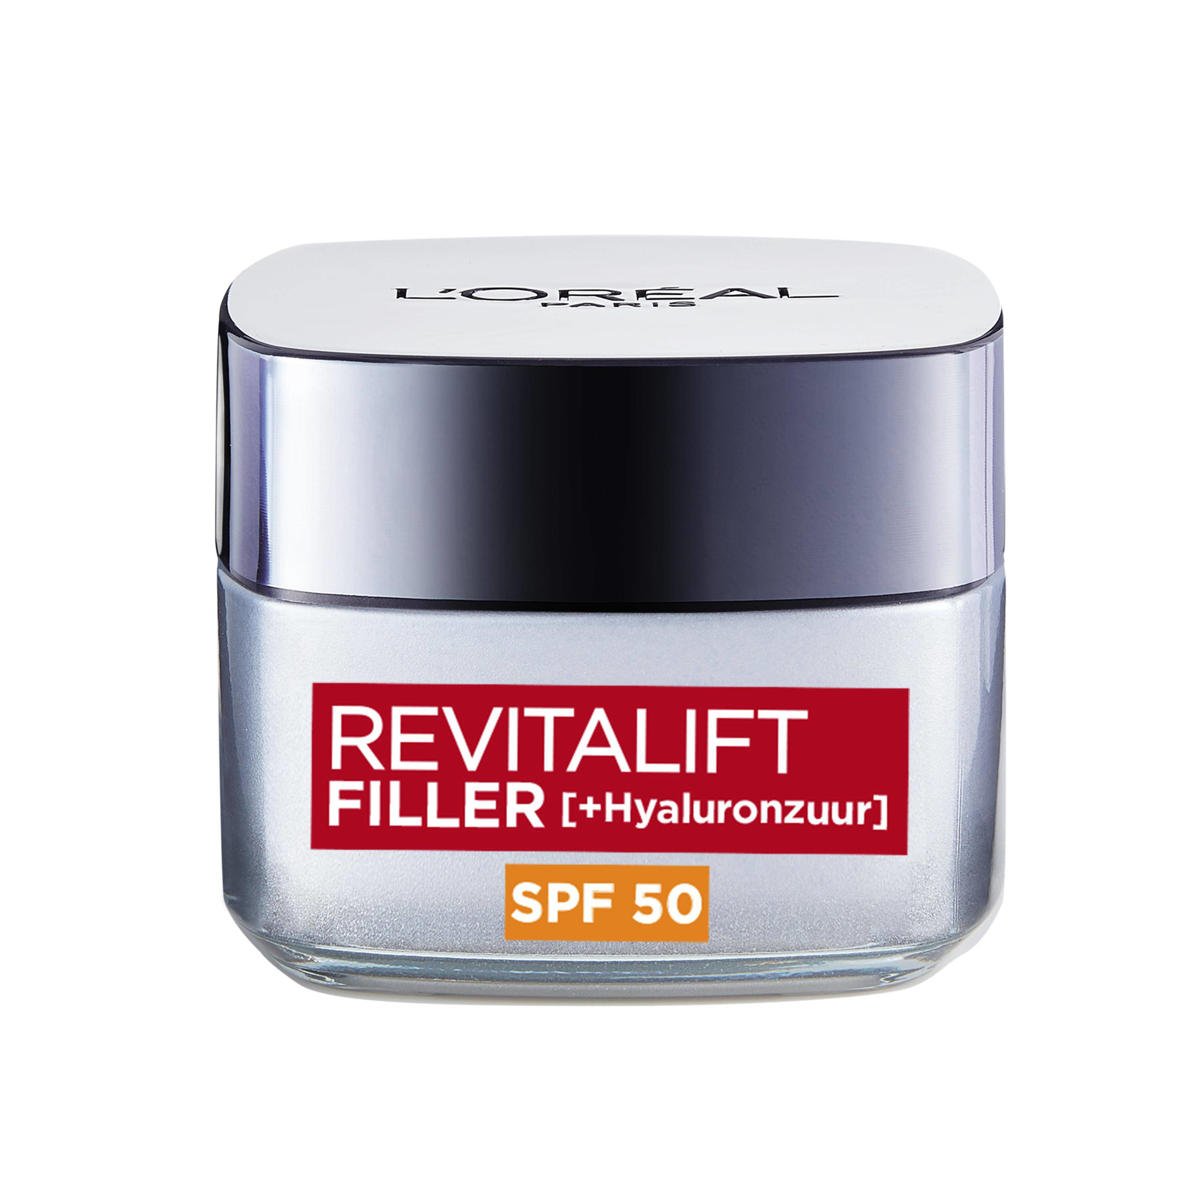 L'Oréal Paris Revitalift Anti-Aging dagcrème - SPF 50 - 50 ml | wehkamp